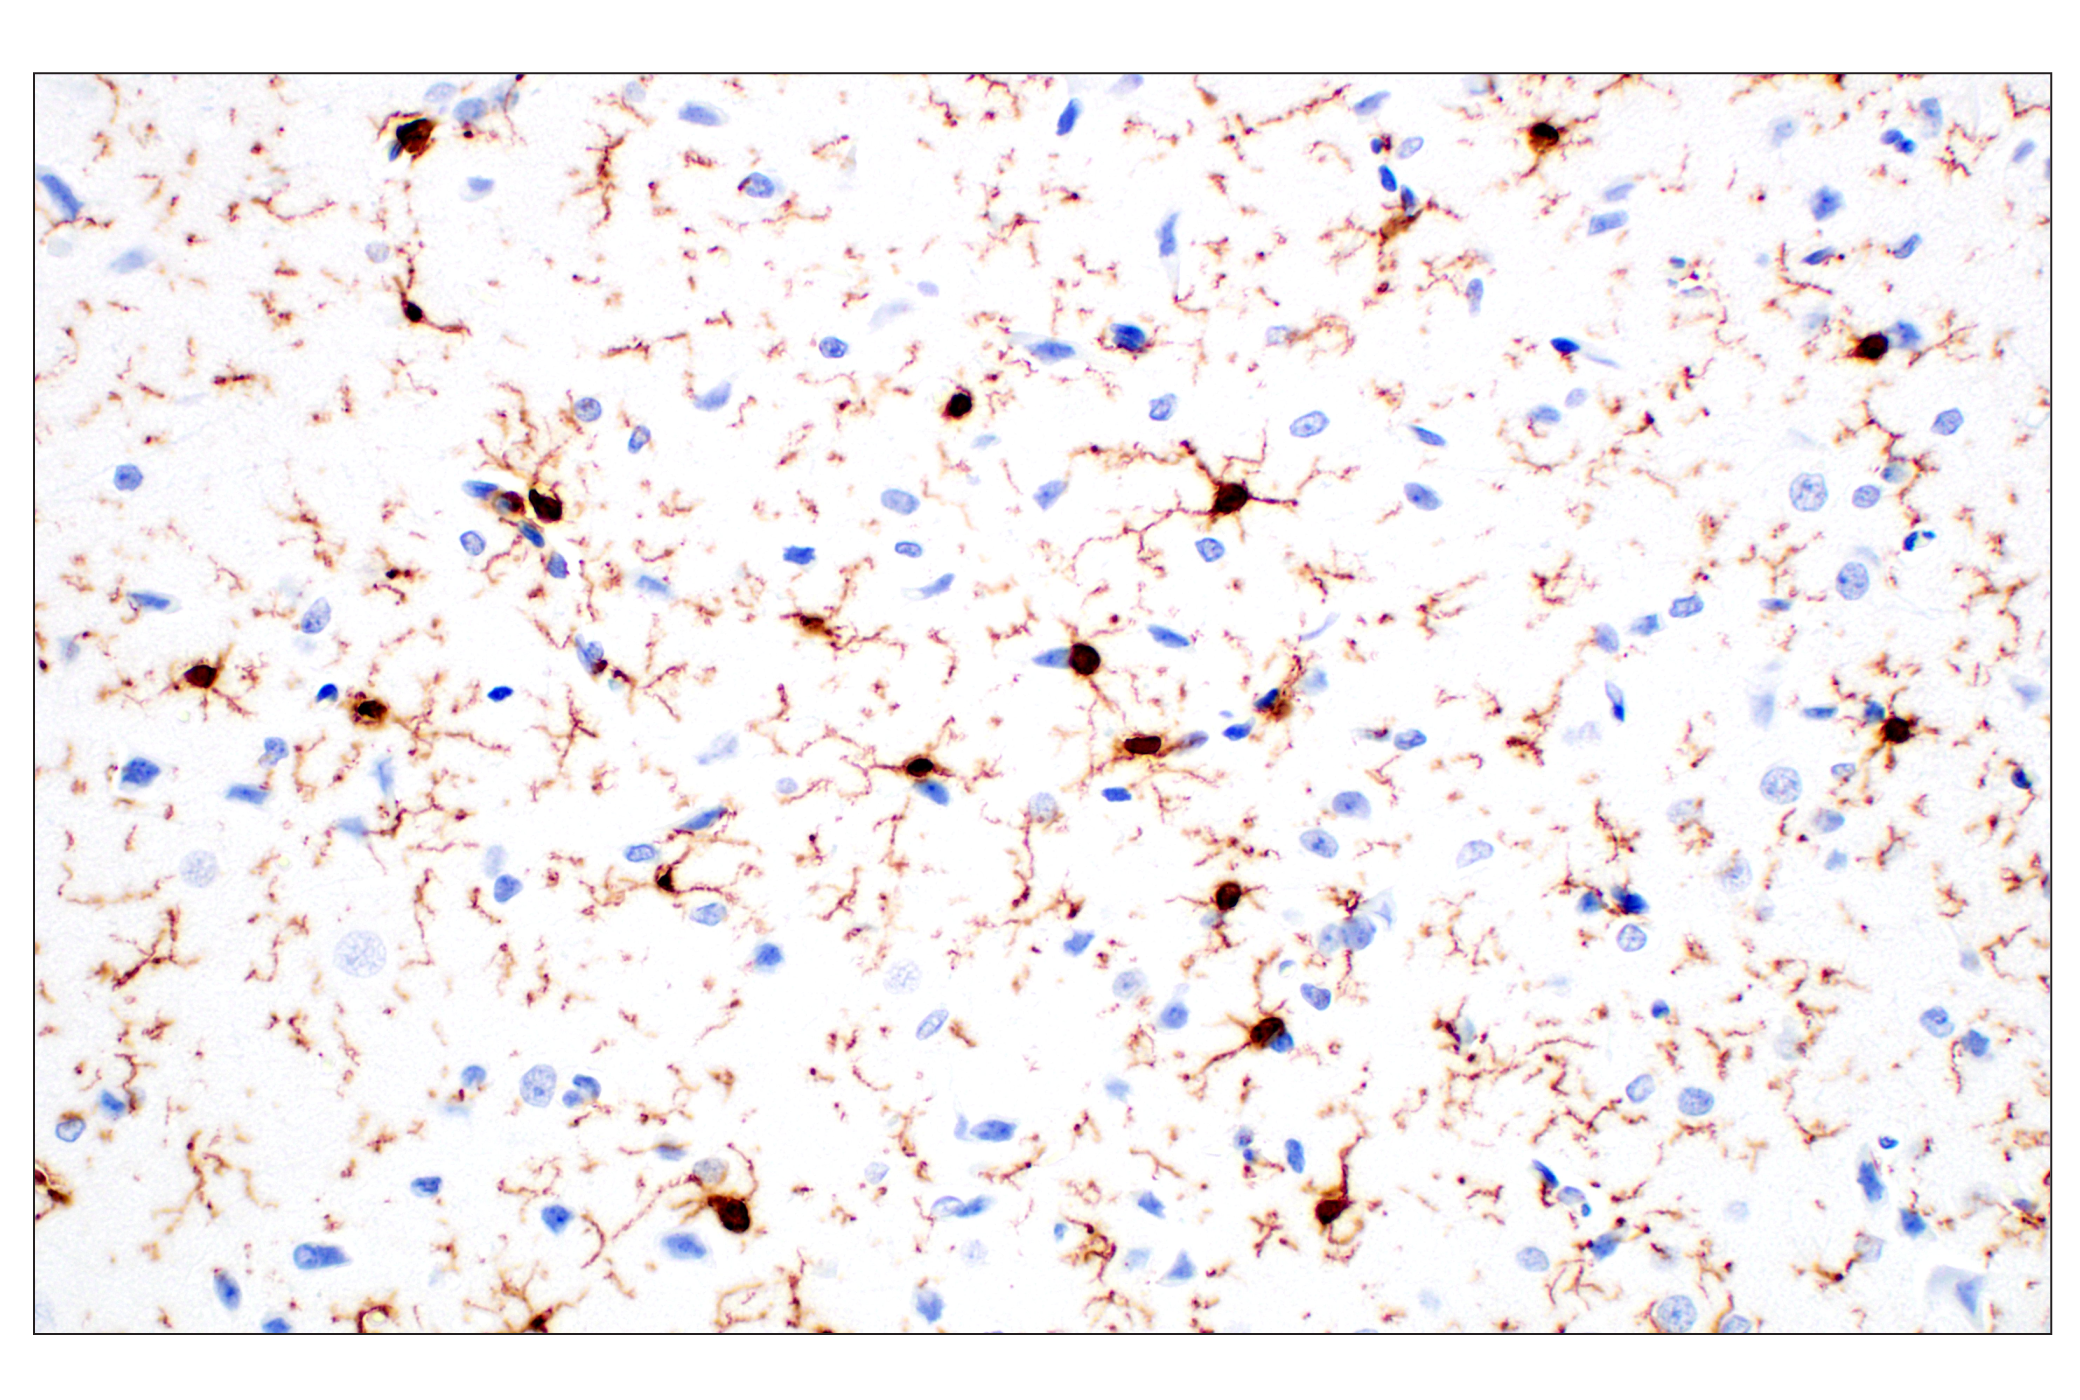  Image 58: Mouse Reactive Alzheimer's Disease Model Microglia Phenotyping IF Antibody Sampler Kit